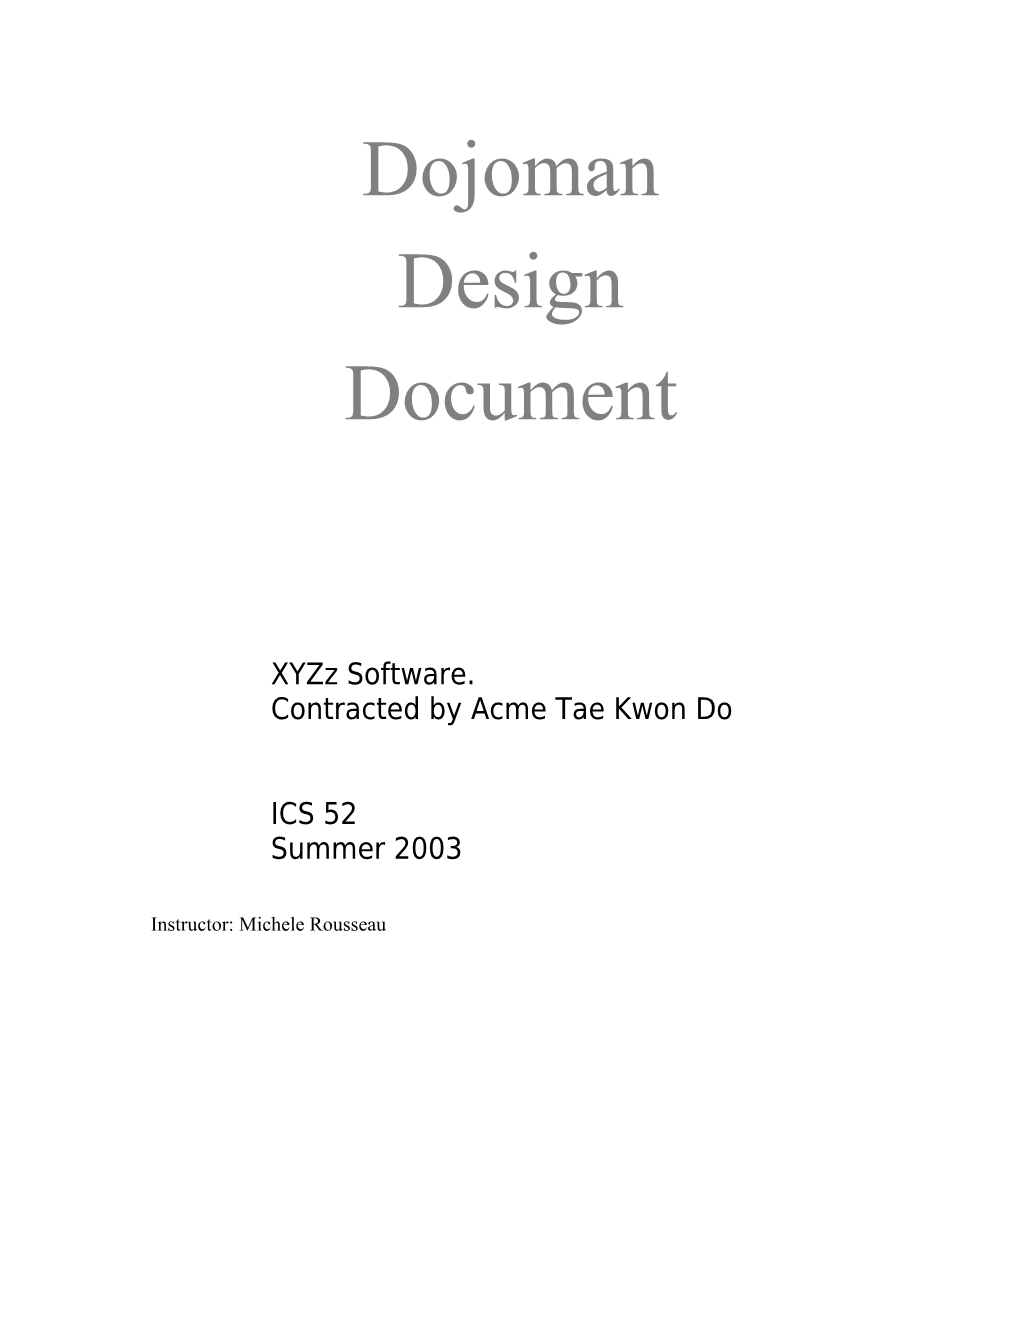 Dojoman Design Document